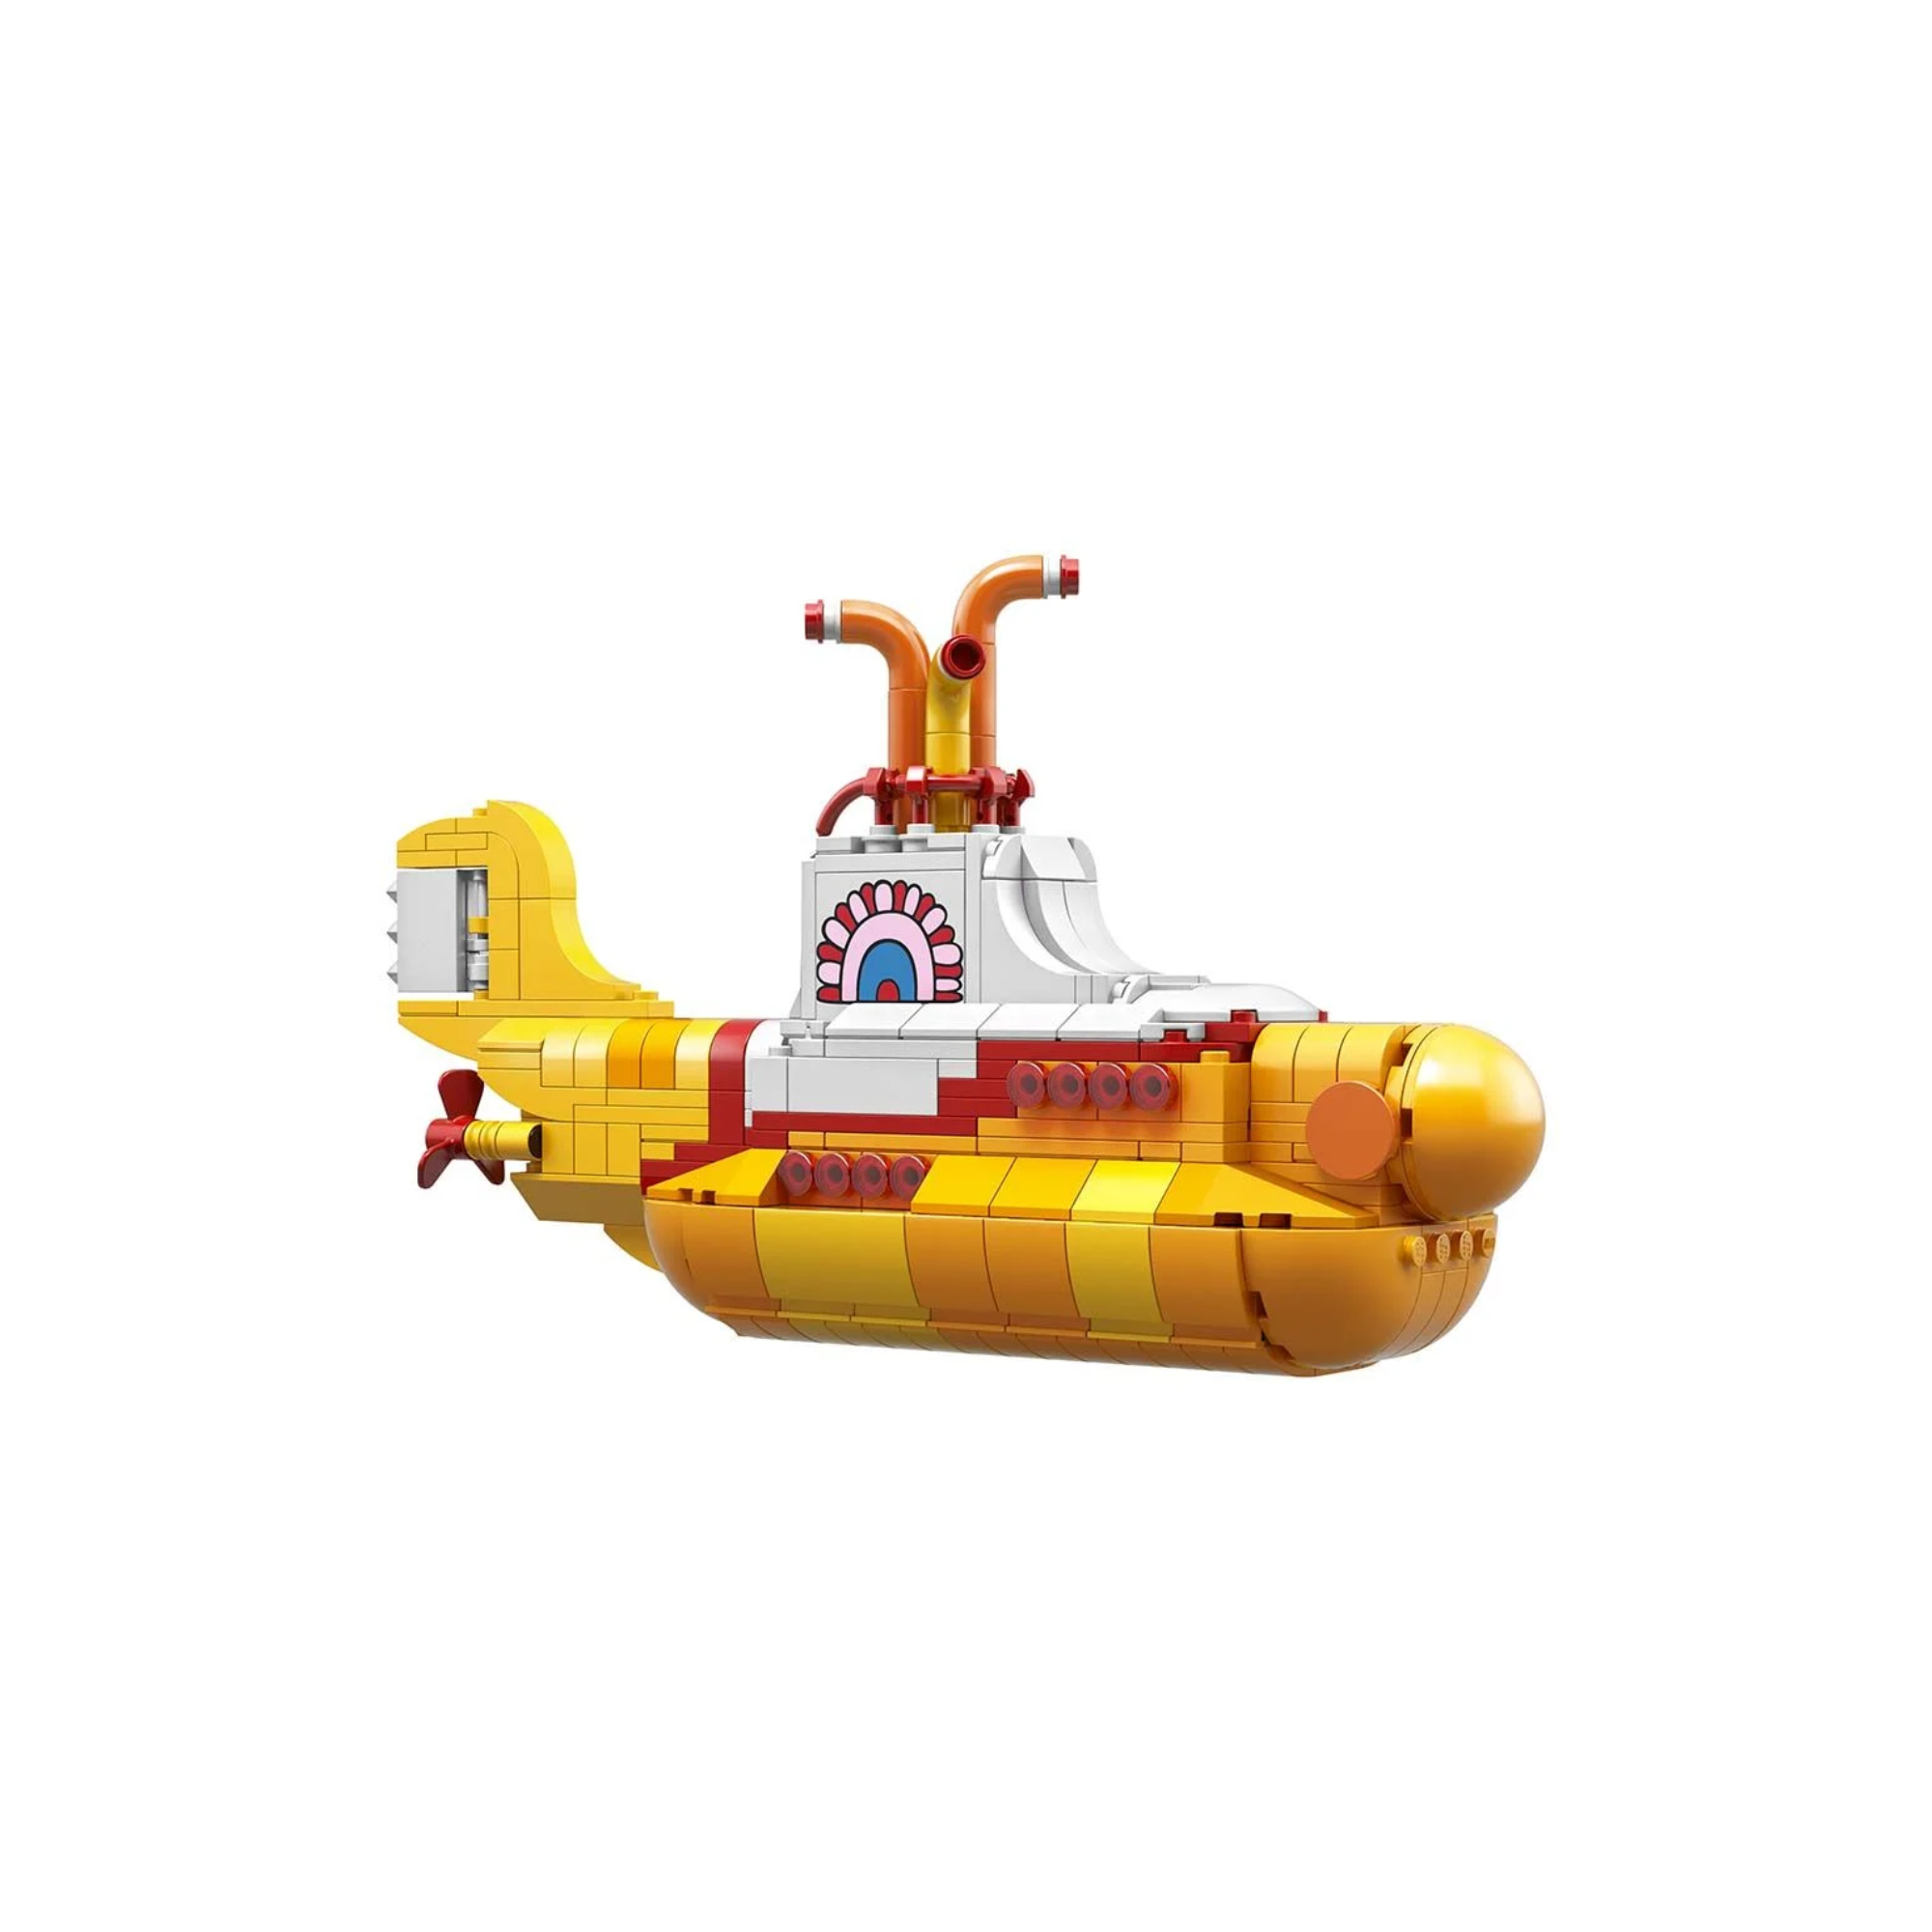 LEGO IDEAS The Beatles Yellow Submarine